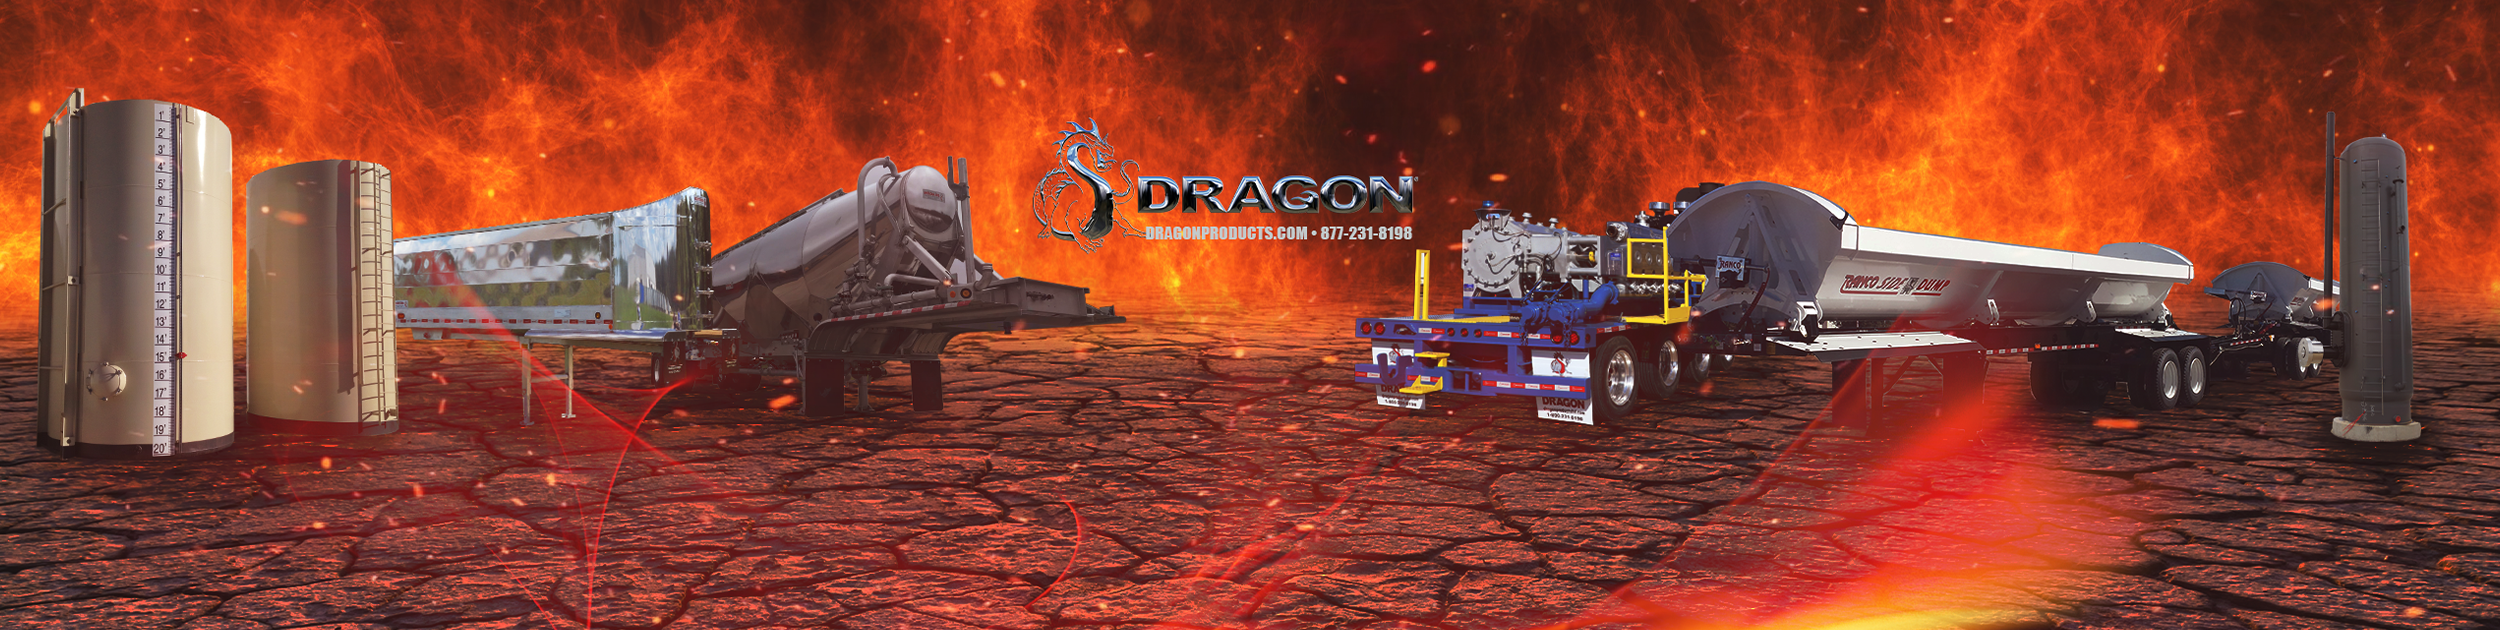 Dragon Banner [2500x630]